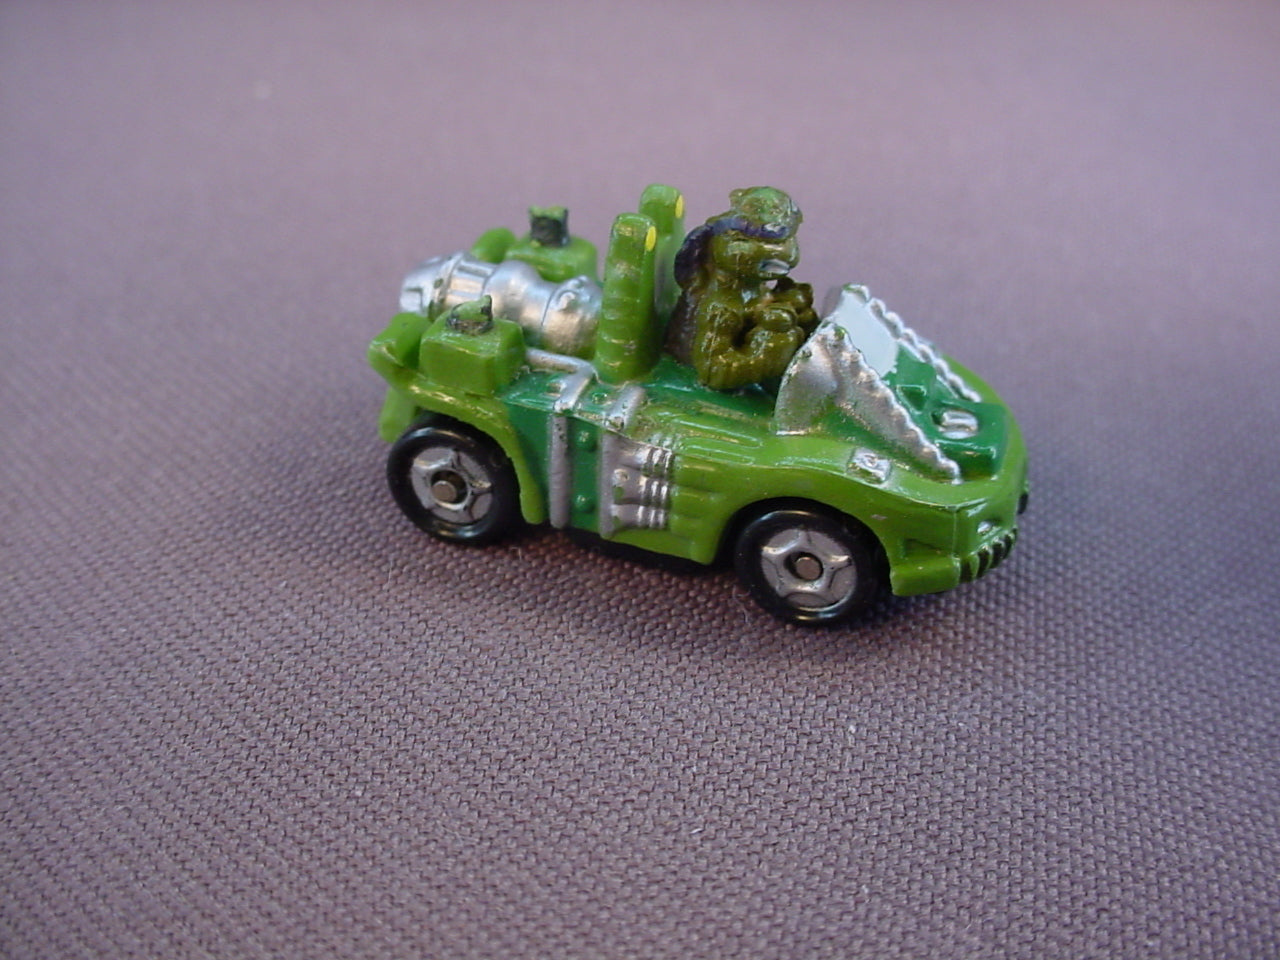 Micro Machines TMNT Green Armored Vehicle, Turtles Vs Foot Ninja, Has A Ball Bearing In The Bottom, Speedeez, Teenage Mutant Ninja Turtles